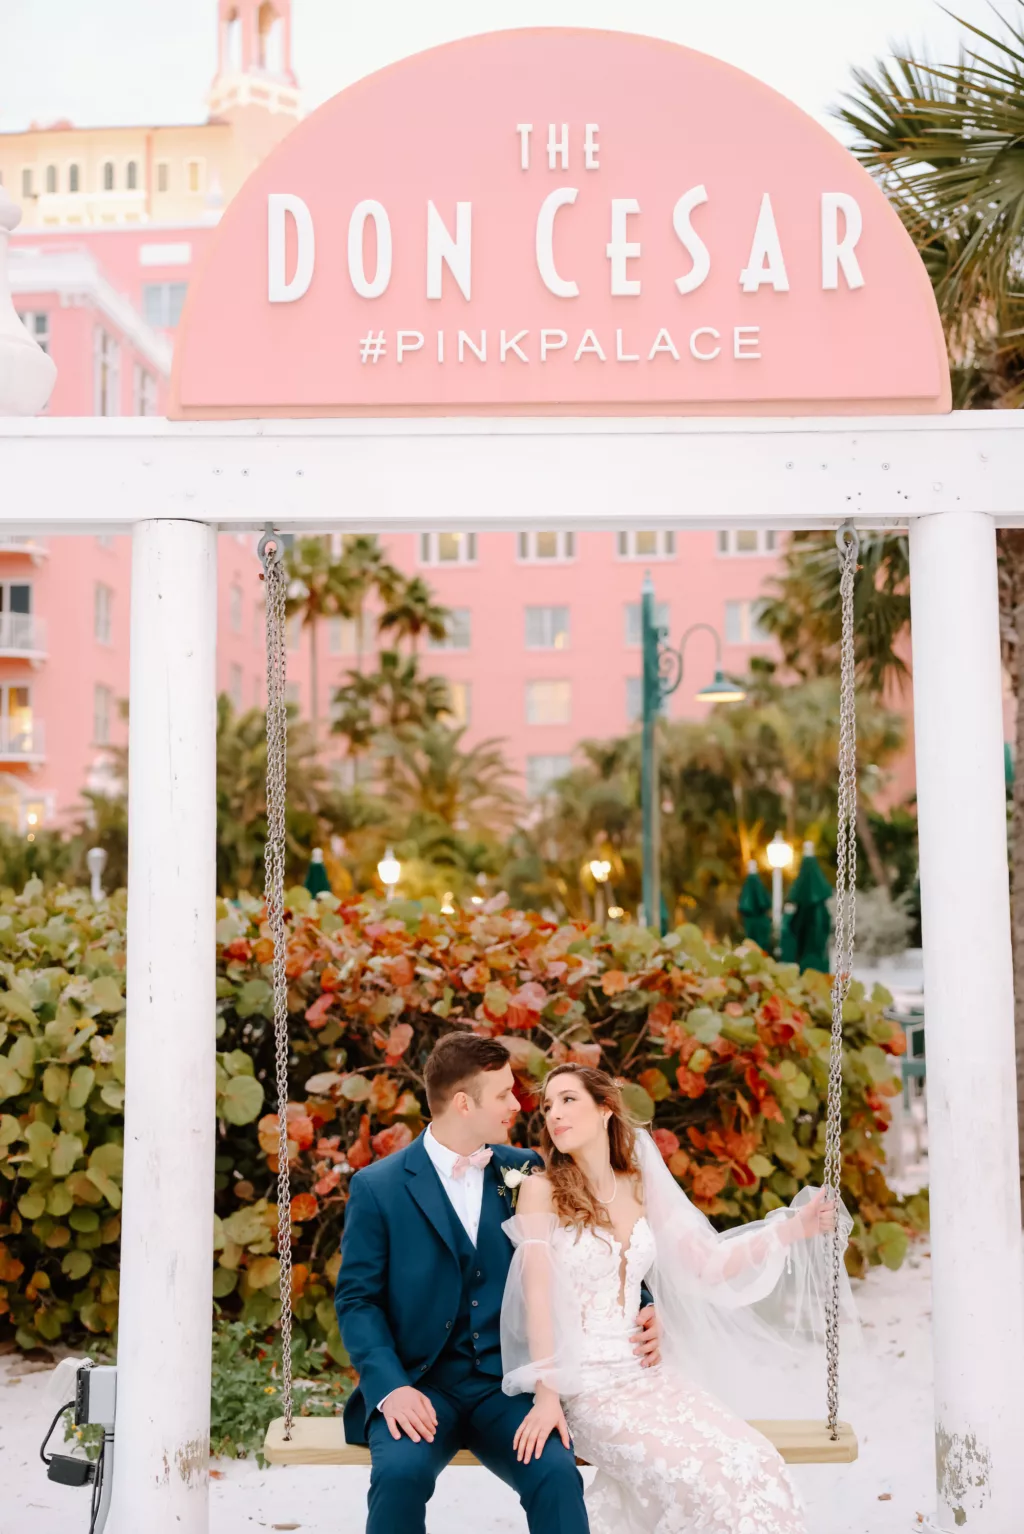 Bride and Groom on Beach Swing Wedding Portrait | Tampa Bay Photographer Lifelong Photography Studio | St. Pete Beach Hotel Venue The Don CeSar